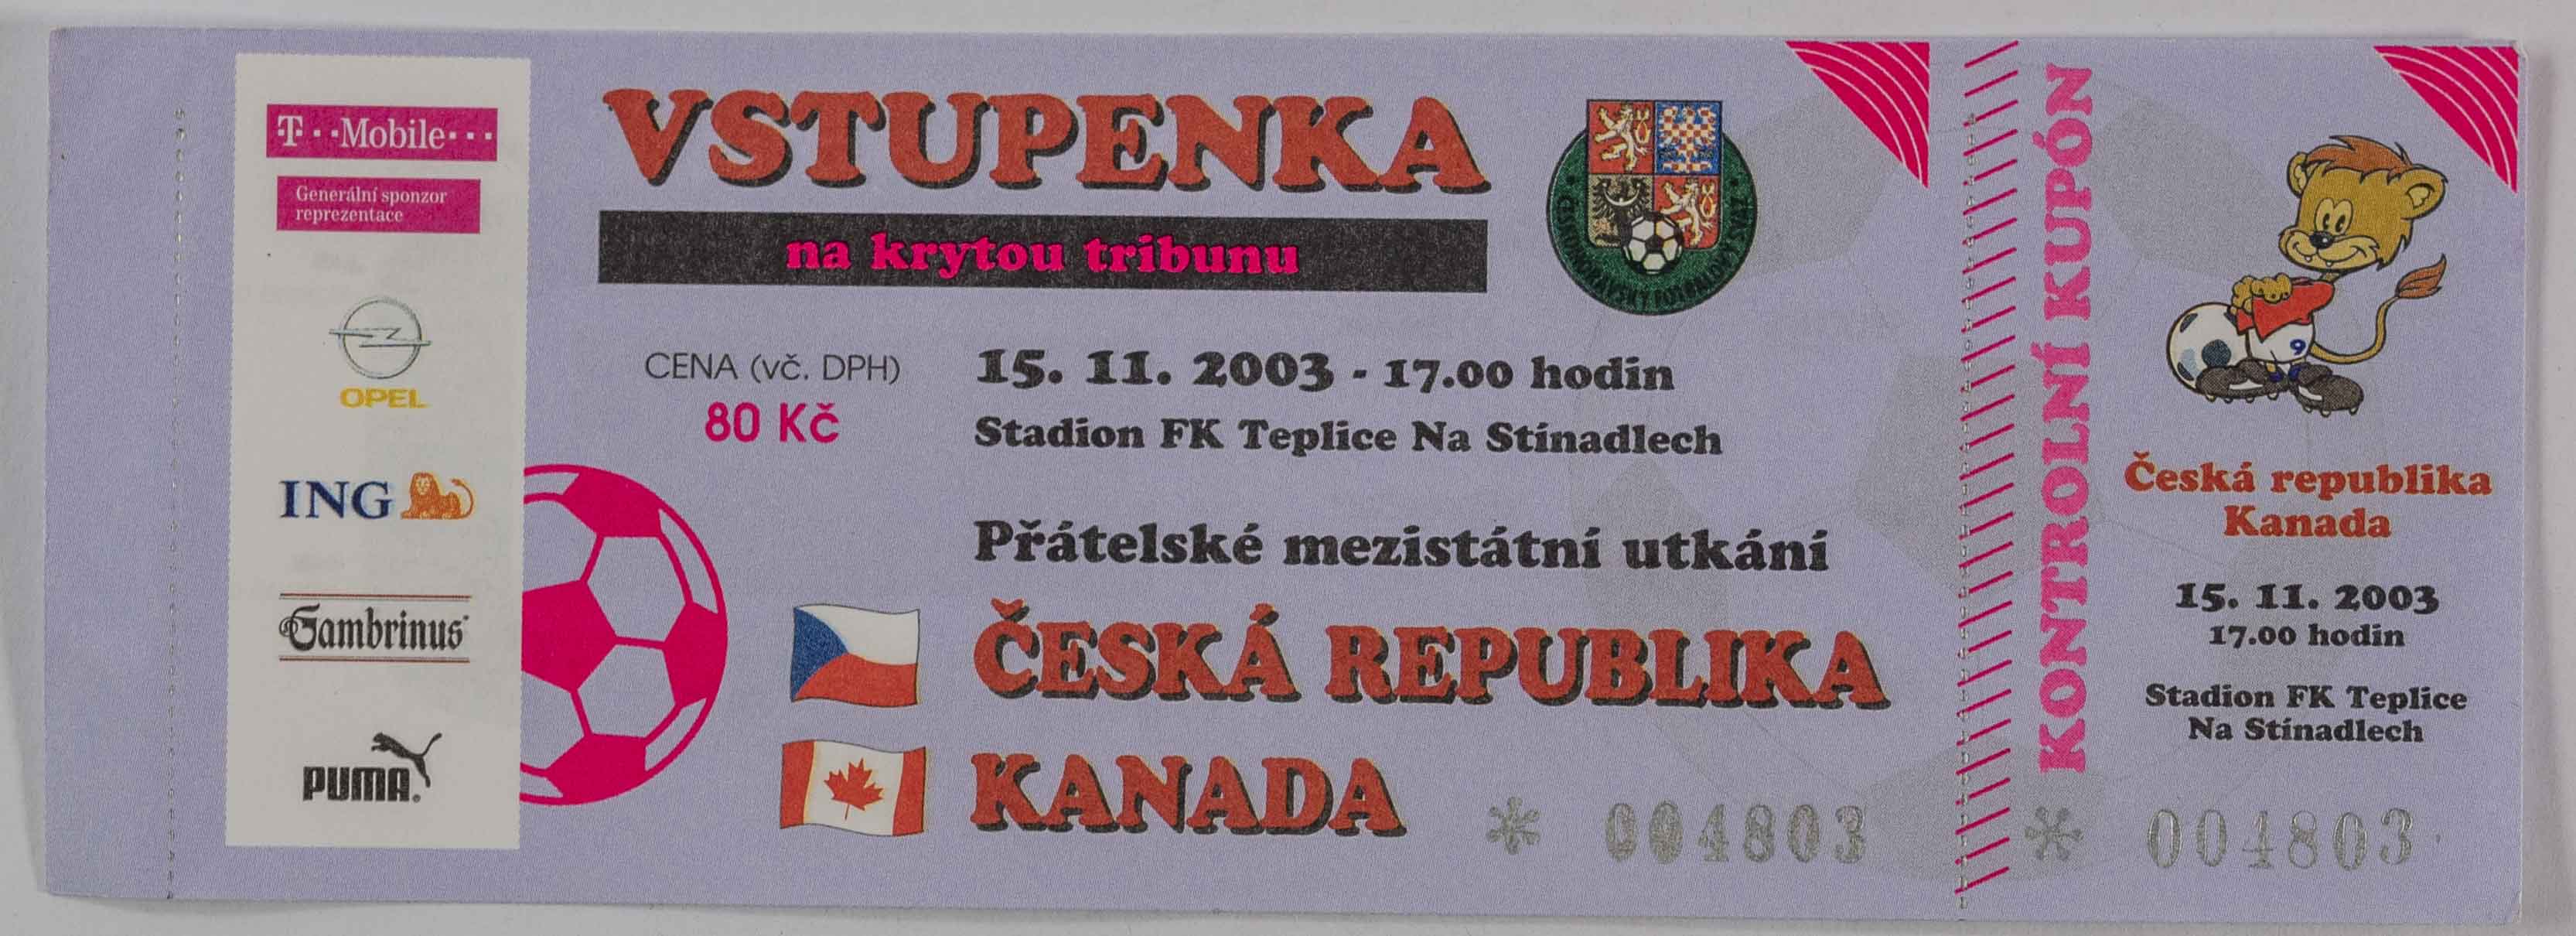 Vstupenka fotbal , ČR v. Kanada, 2003